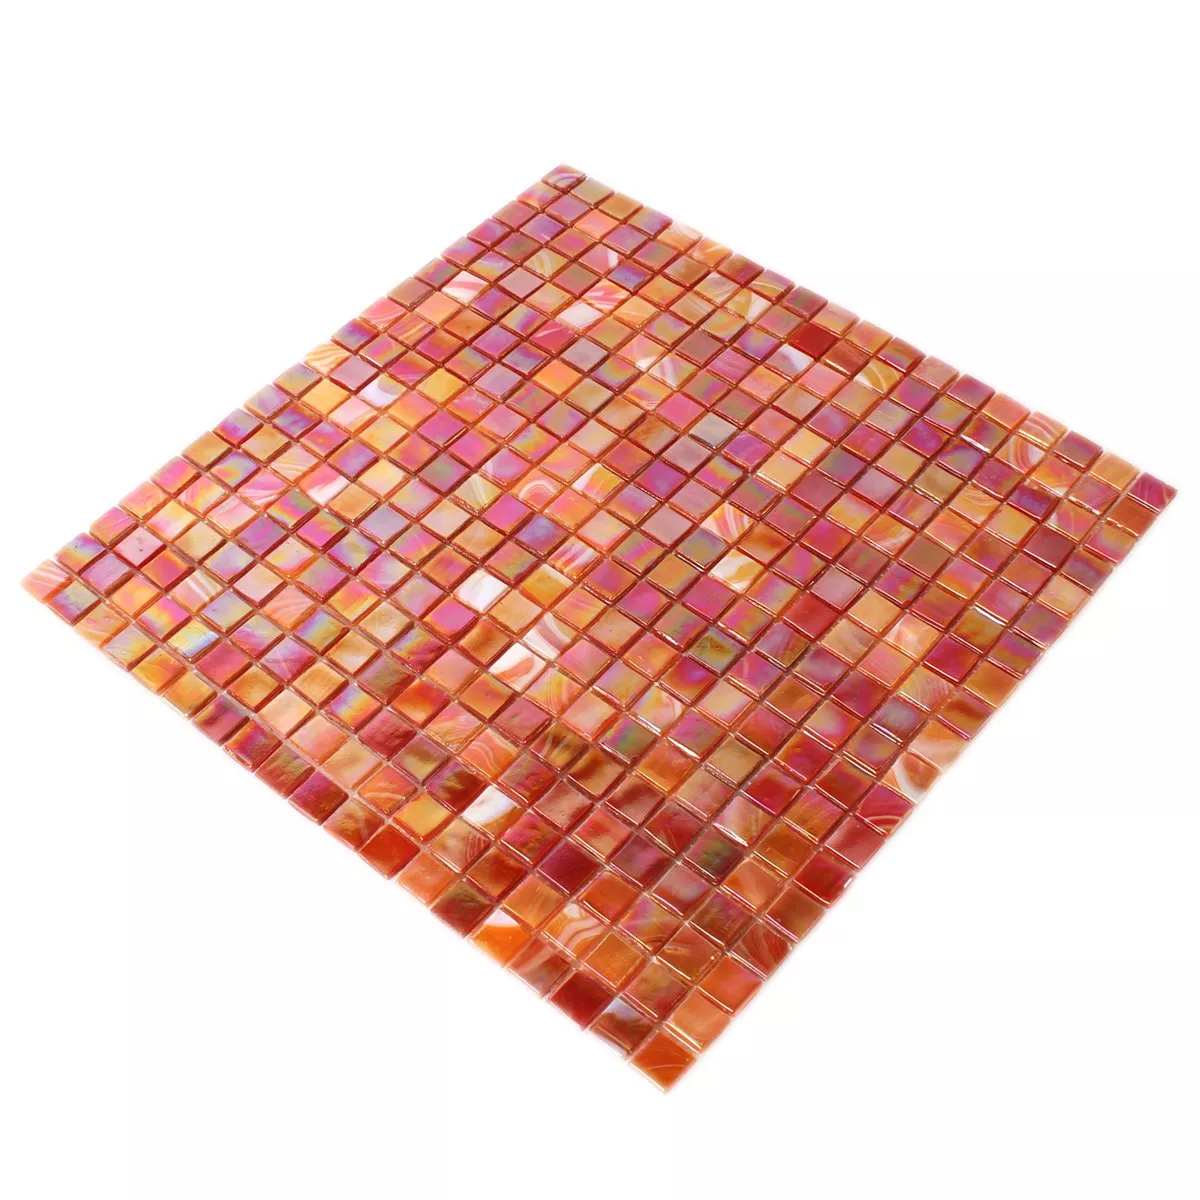 Vzorek Skleněná Mozaika Dlaždice Perleťový Efekt Červená Mix